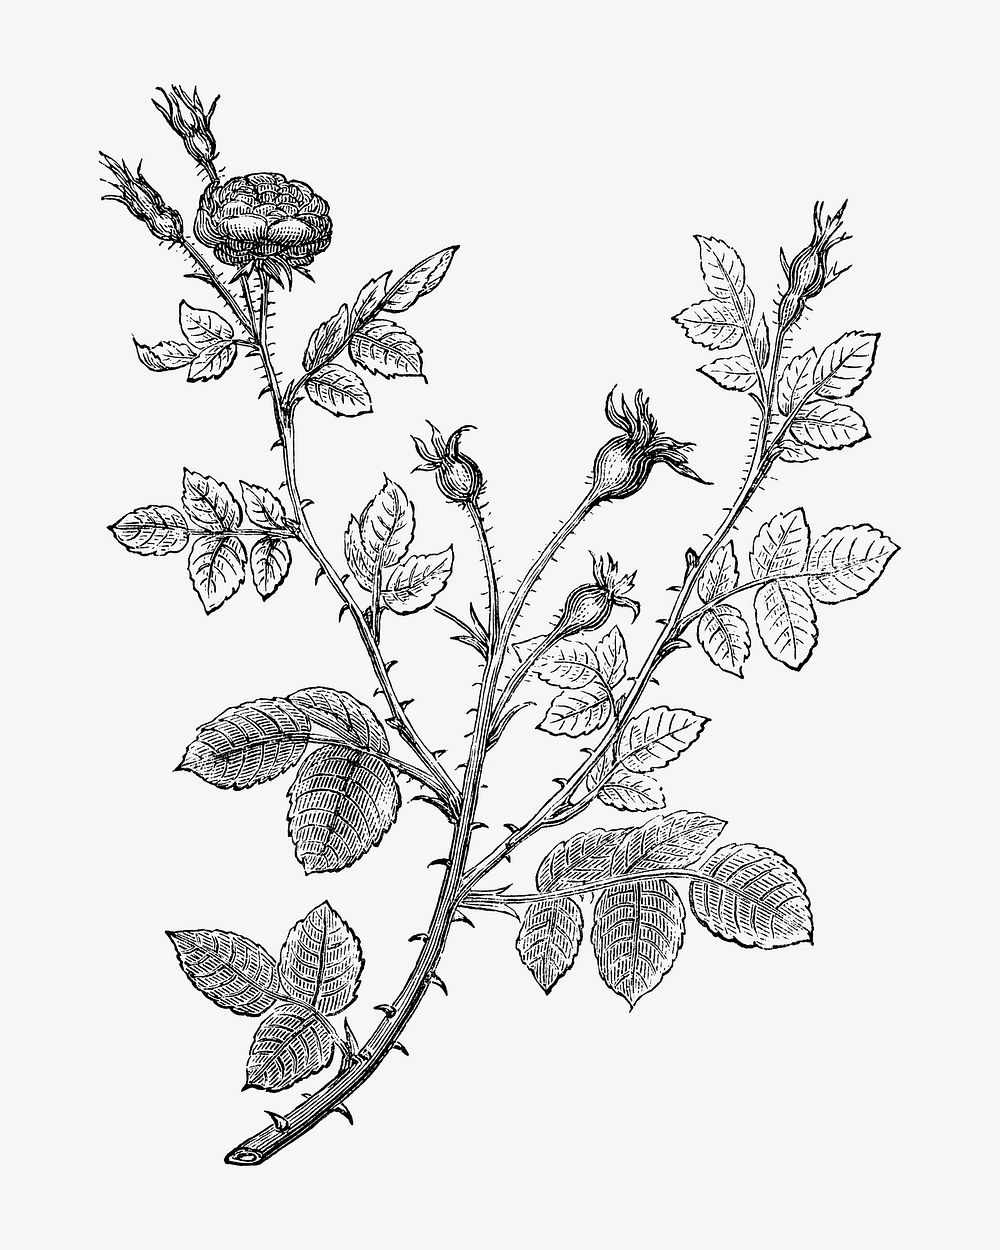 Vintage rose branches, black & white flower collage element psd  by François-Frédéric Grobon. Remixed by rawpixel.